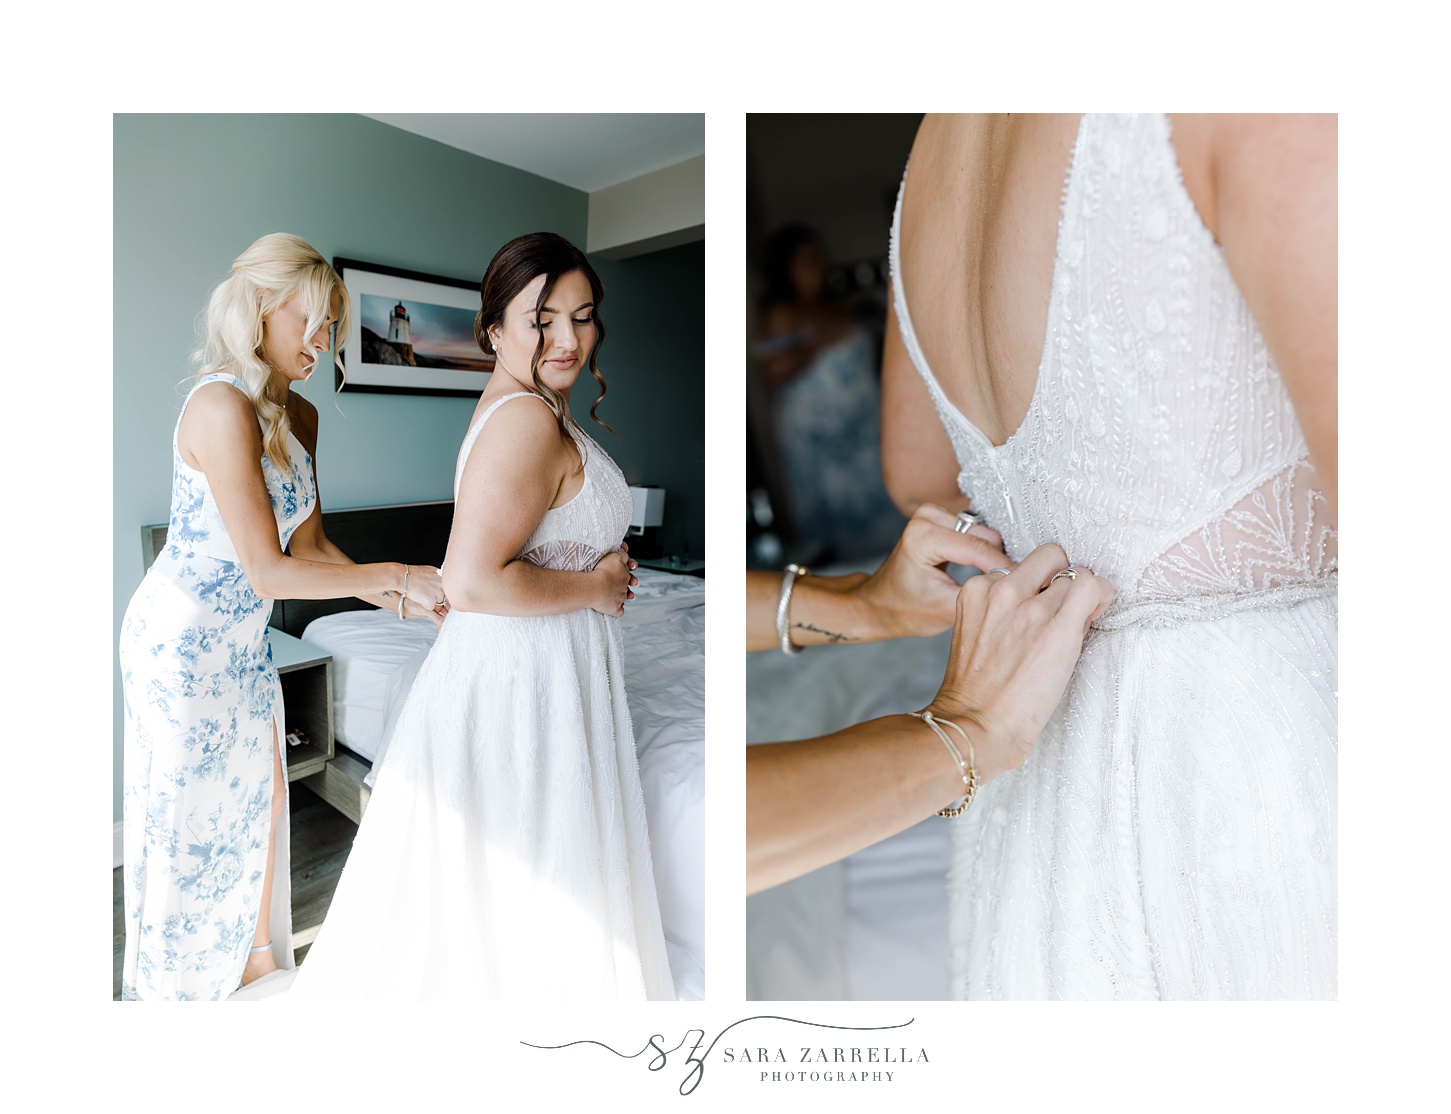 mother helps bride into wedding dress adjusting buttons